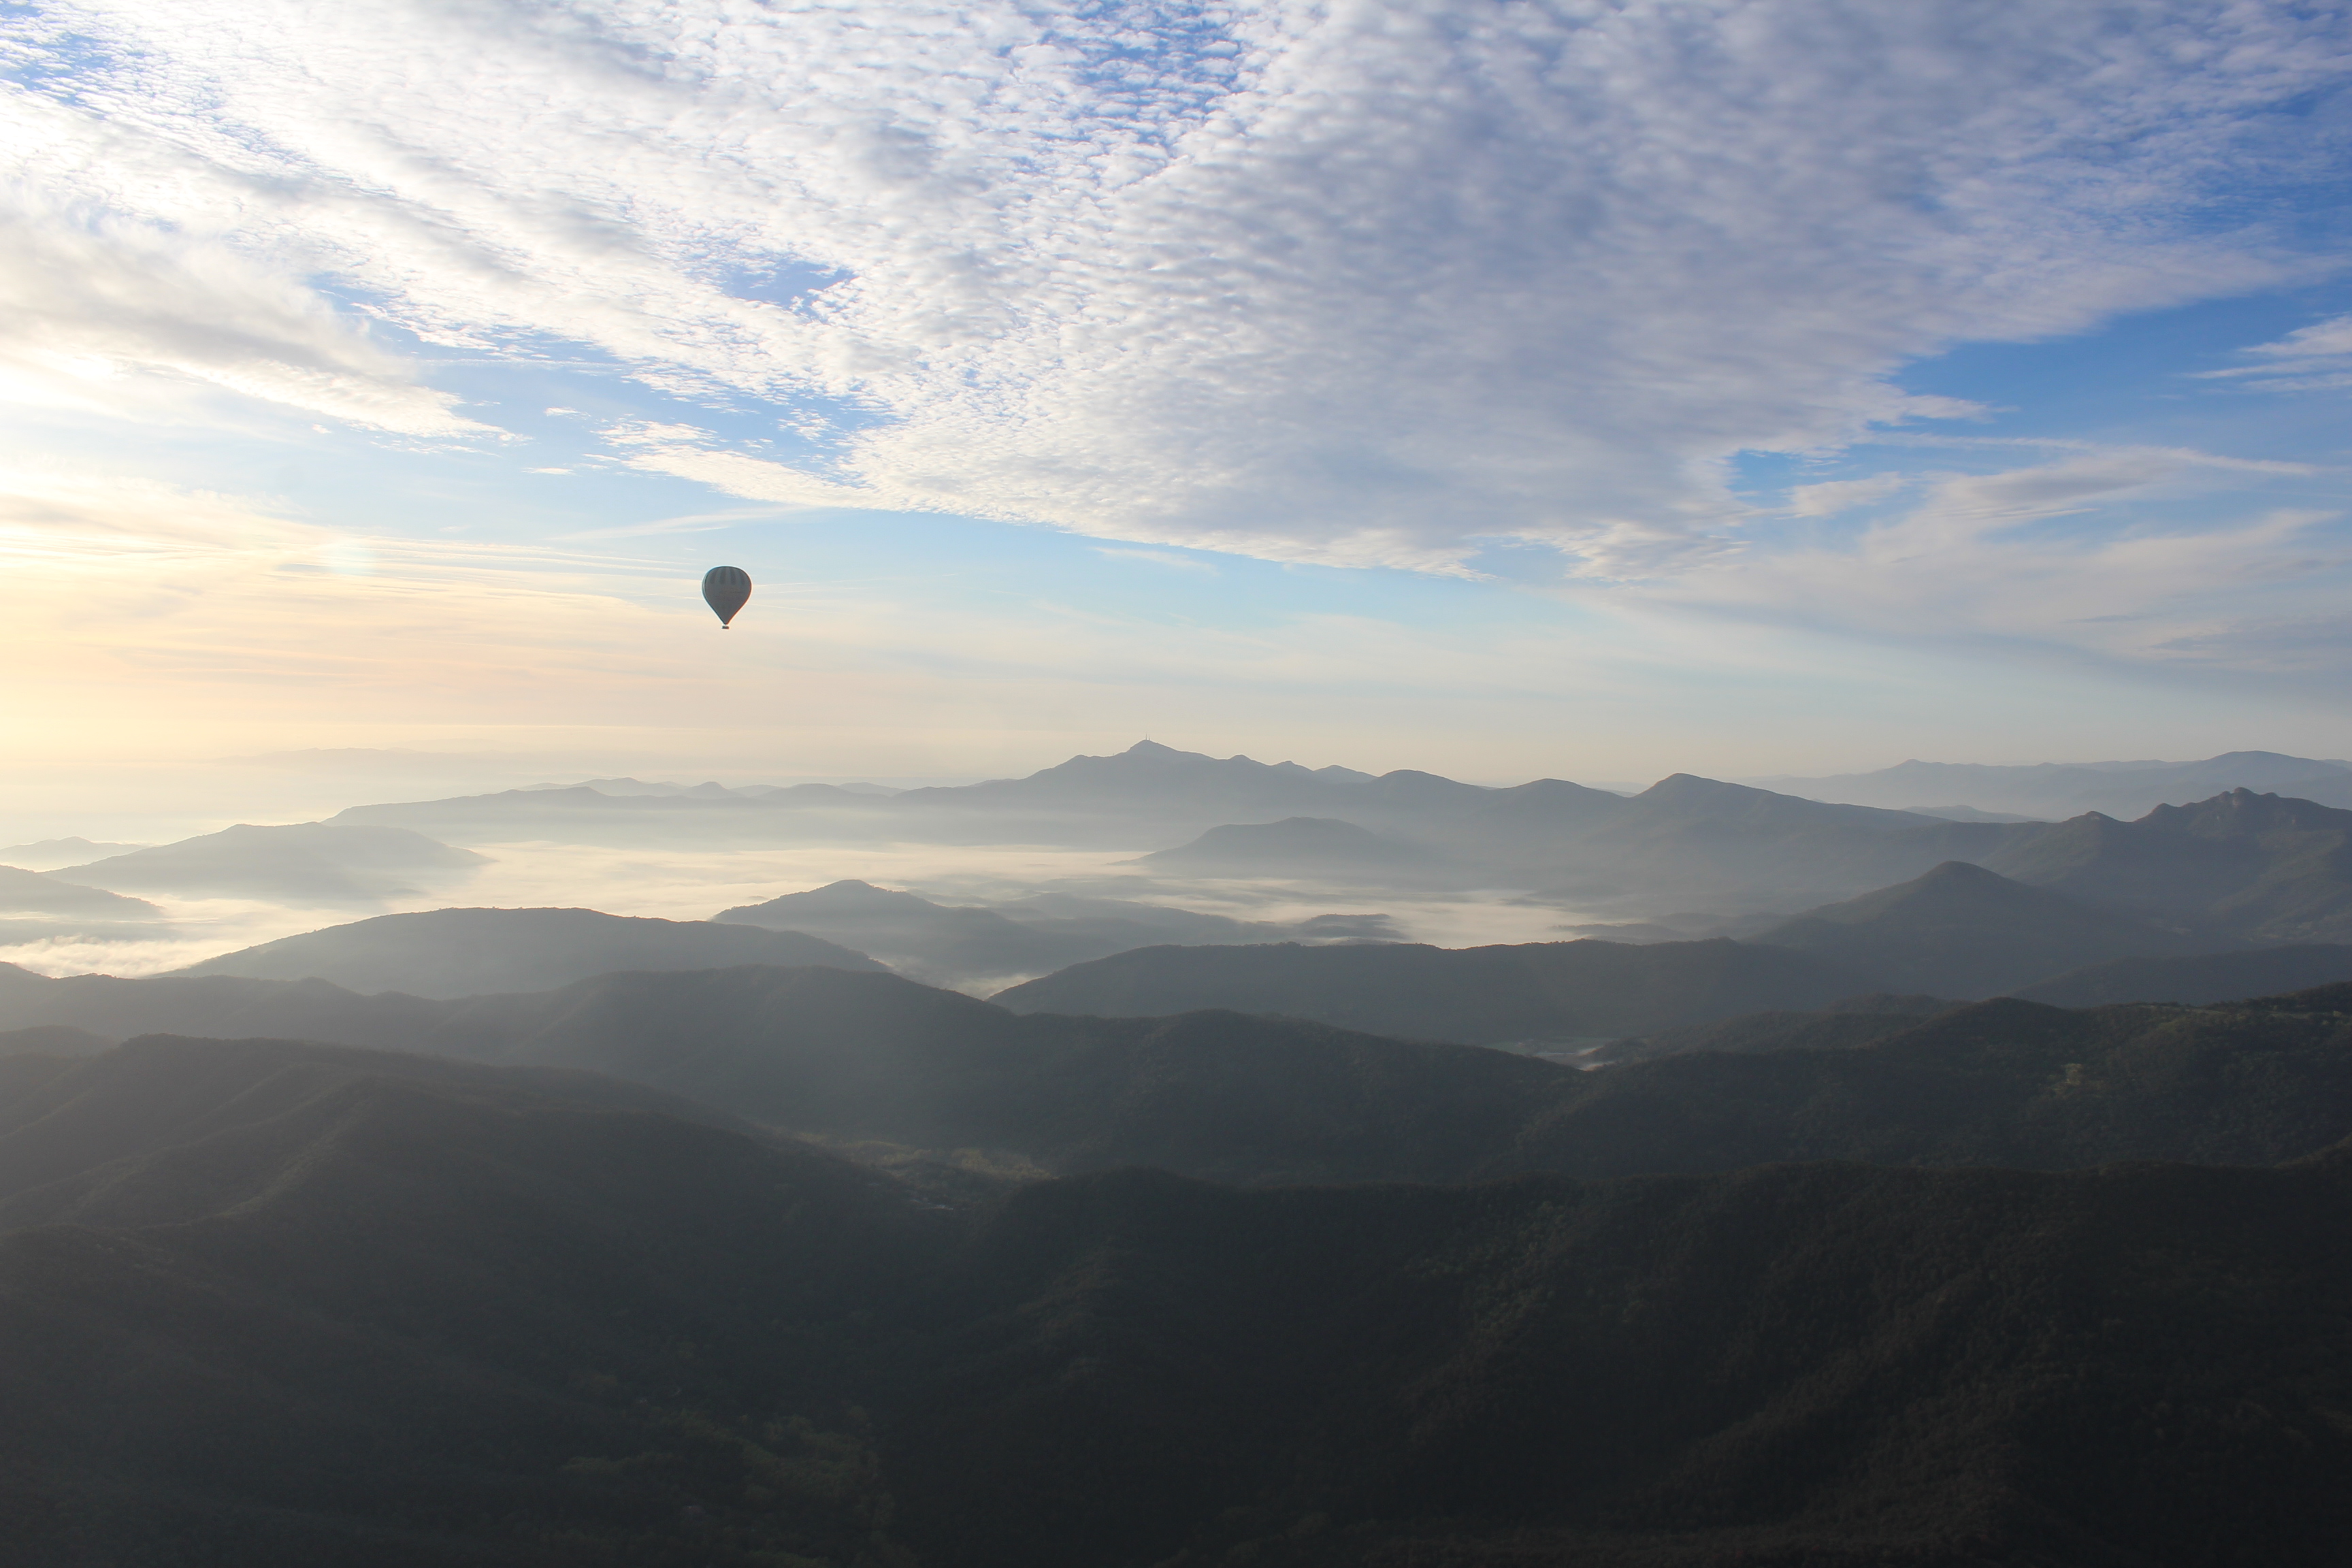 General 3456x2304 nature hot air balloons mist clouds sky mountains sunlight landscape